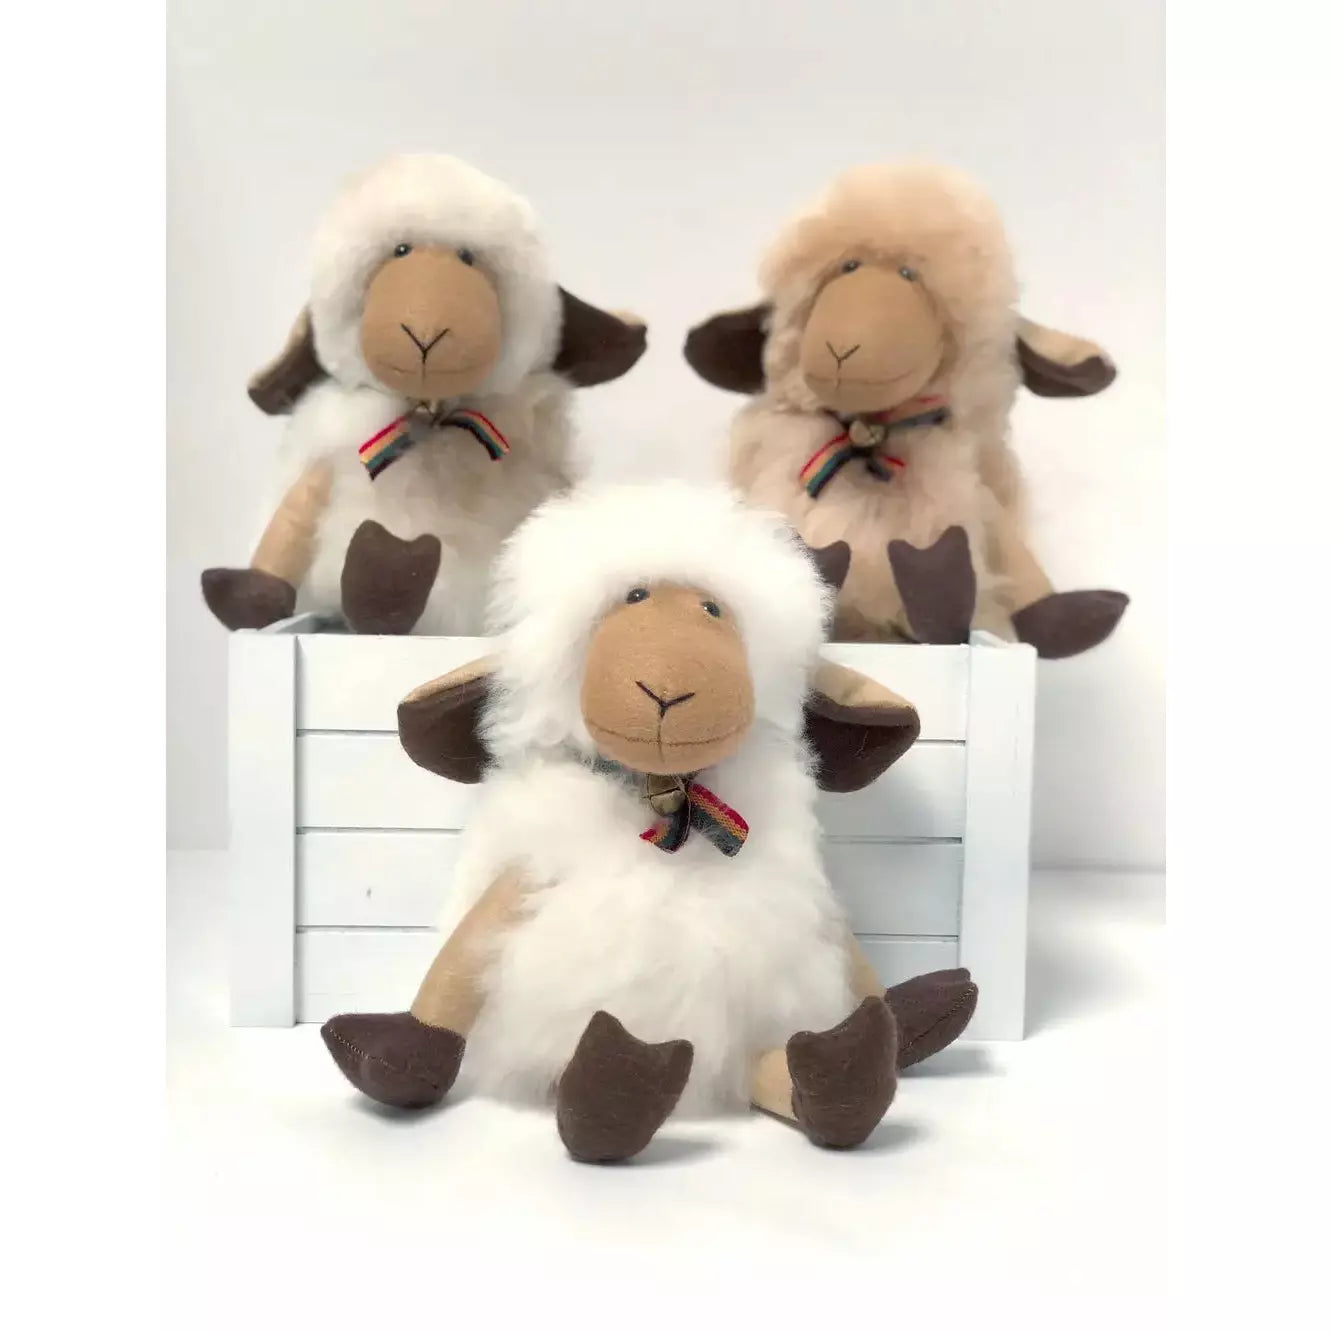 Alpaca Stuffed Animal - Sheep